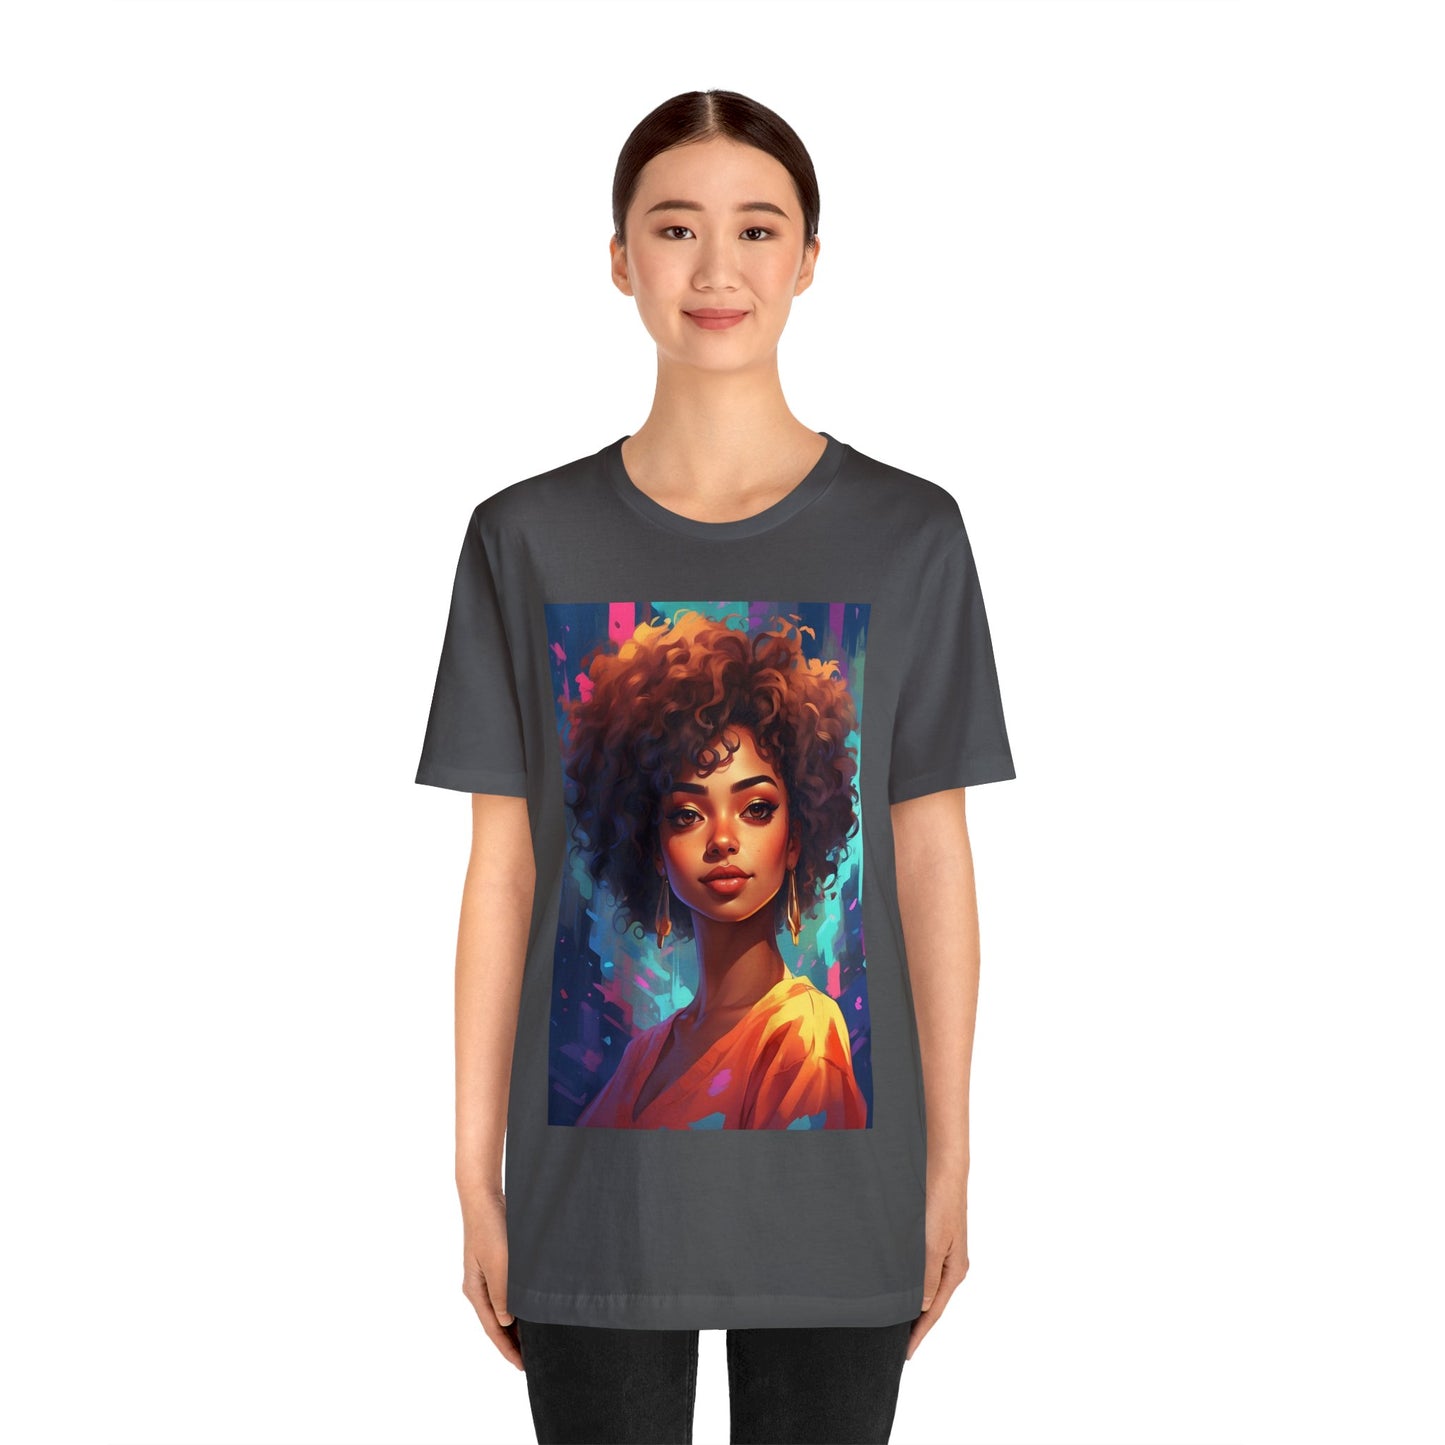 Yasmine Dreams | HD Graphic | Black Girl | Black Queens | Animated | Unisex | Men's | Women's | Tee | T-Shirt